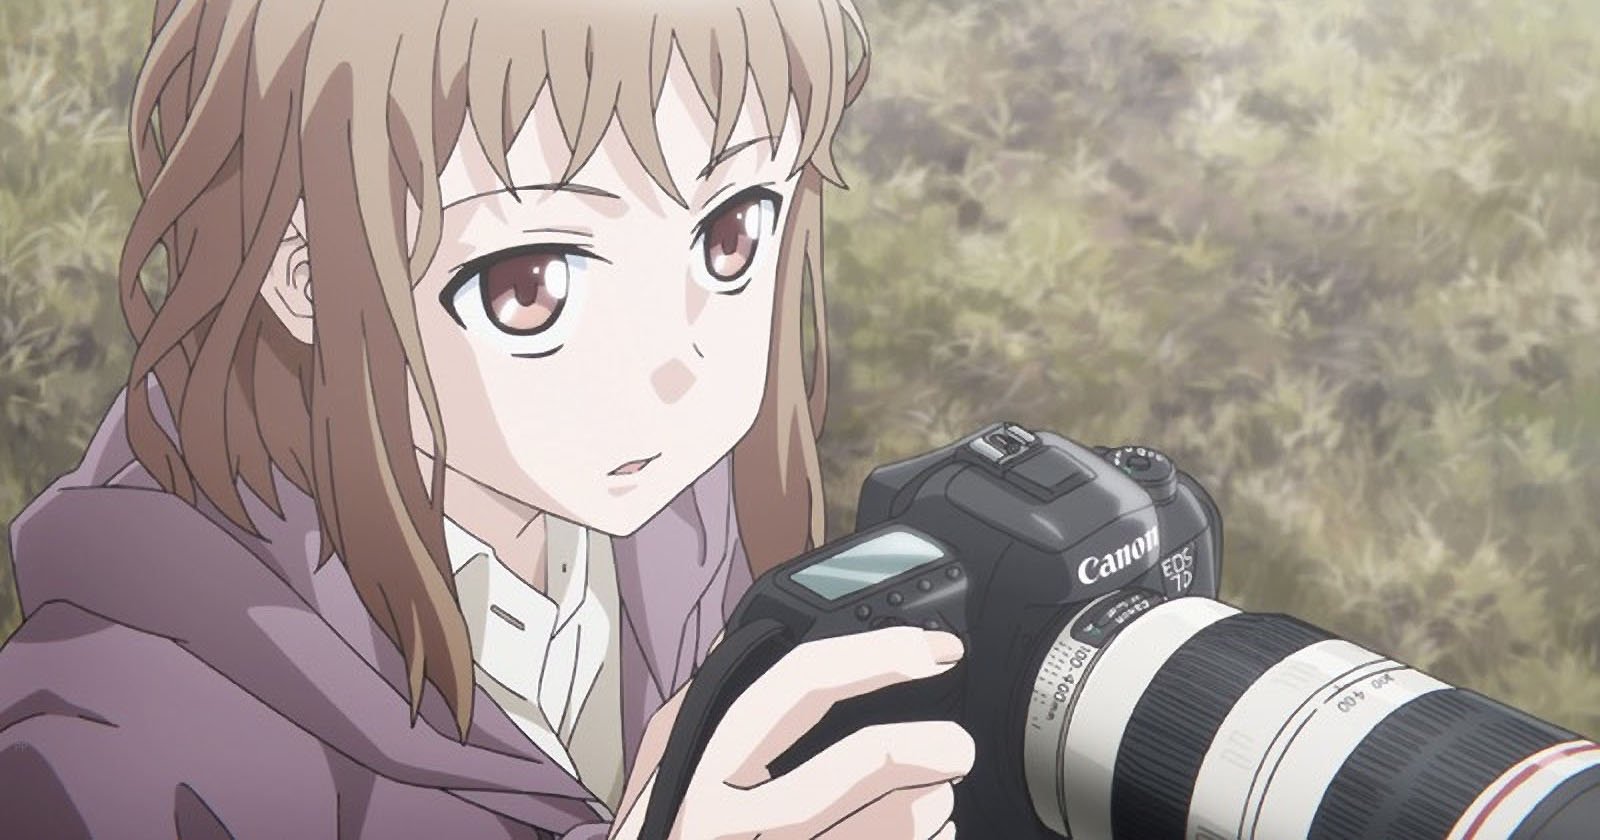 Anime Girl Photographer HD wallpapers free download | Wallpaperbetter